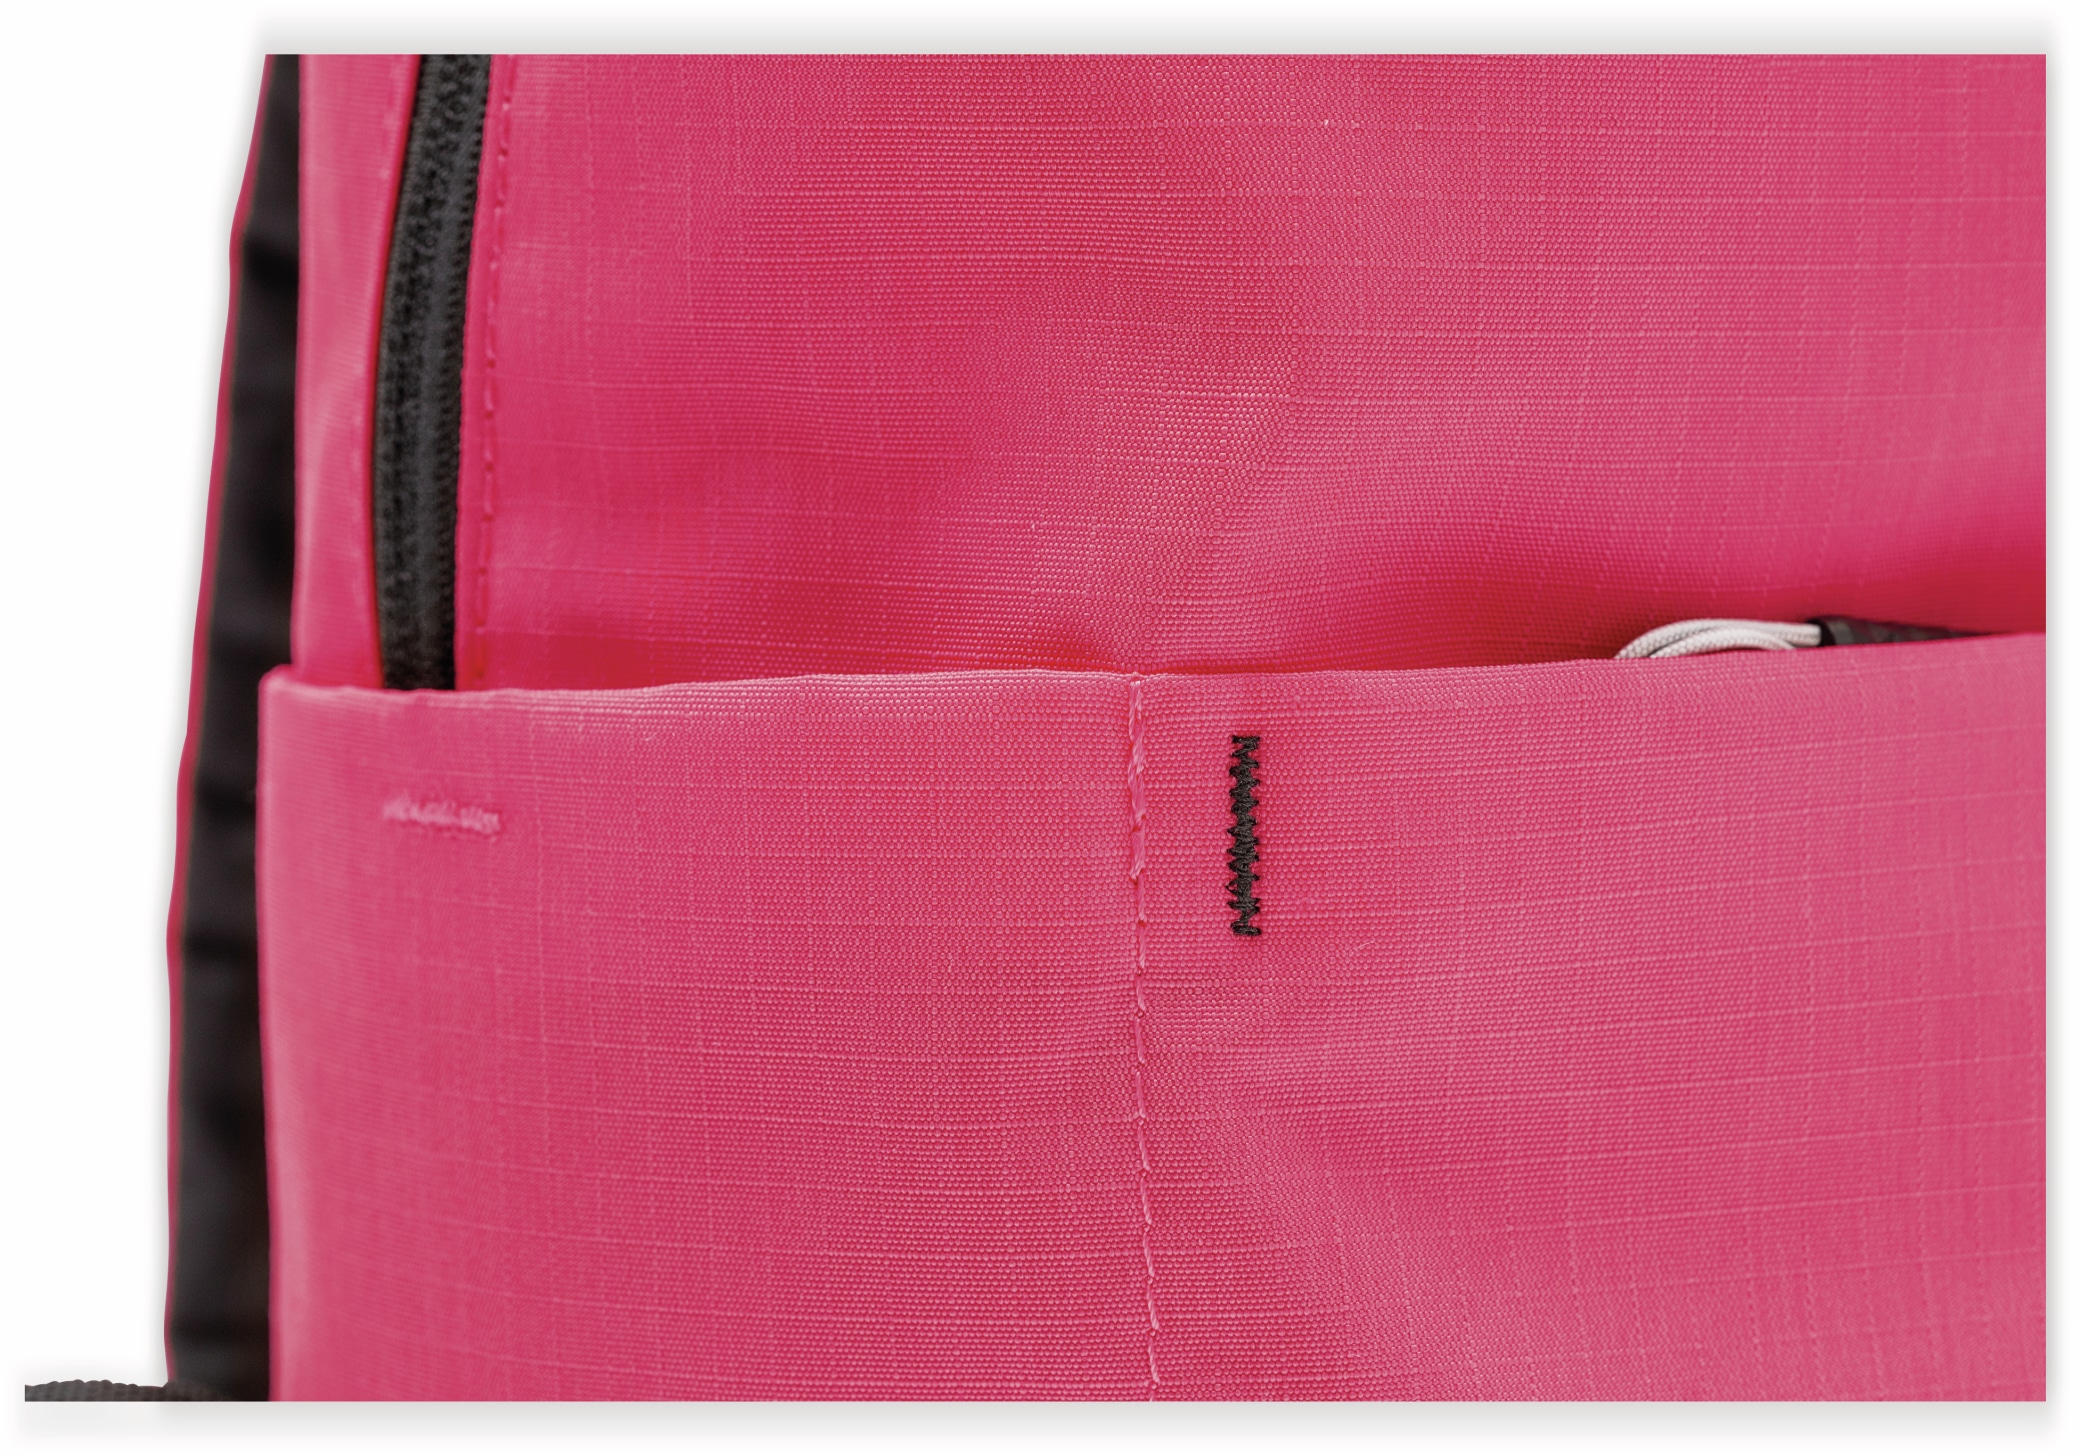 Xiaomi Rucksack Casual Daypack, pink, 340x225x130 mm